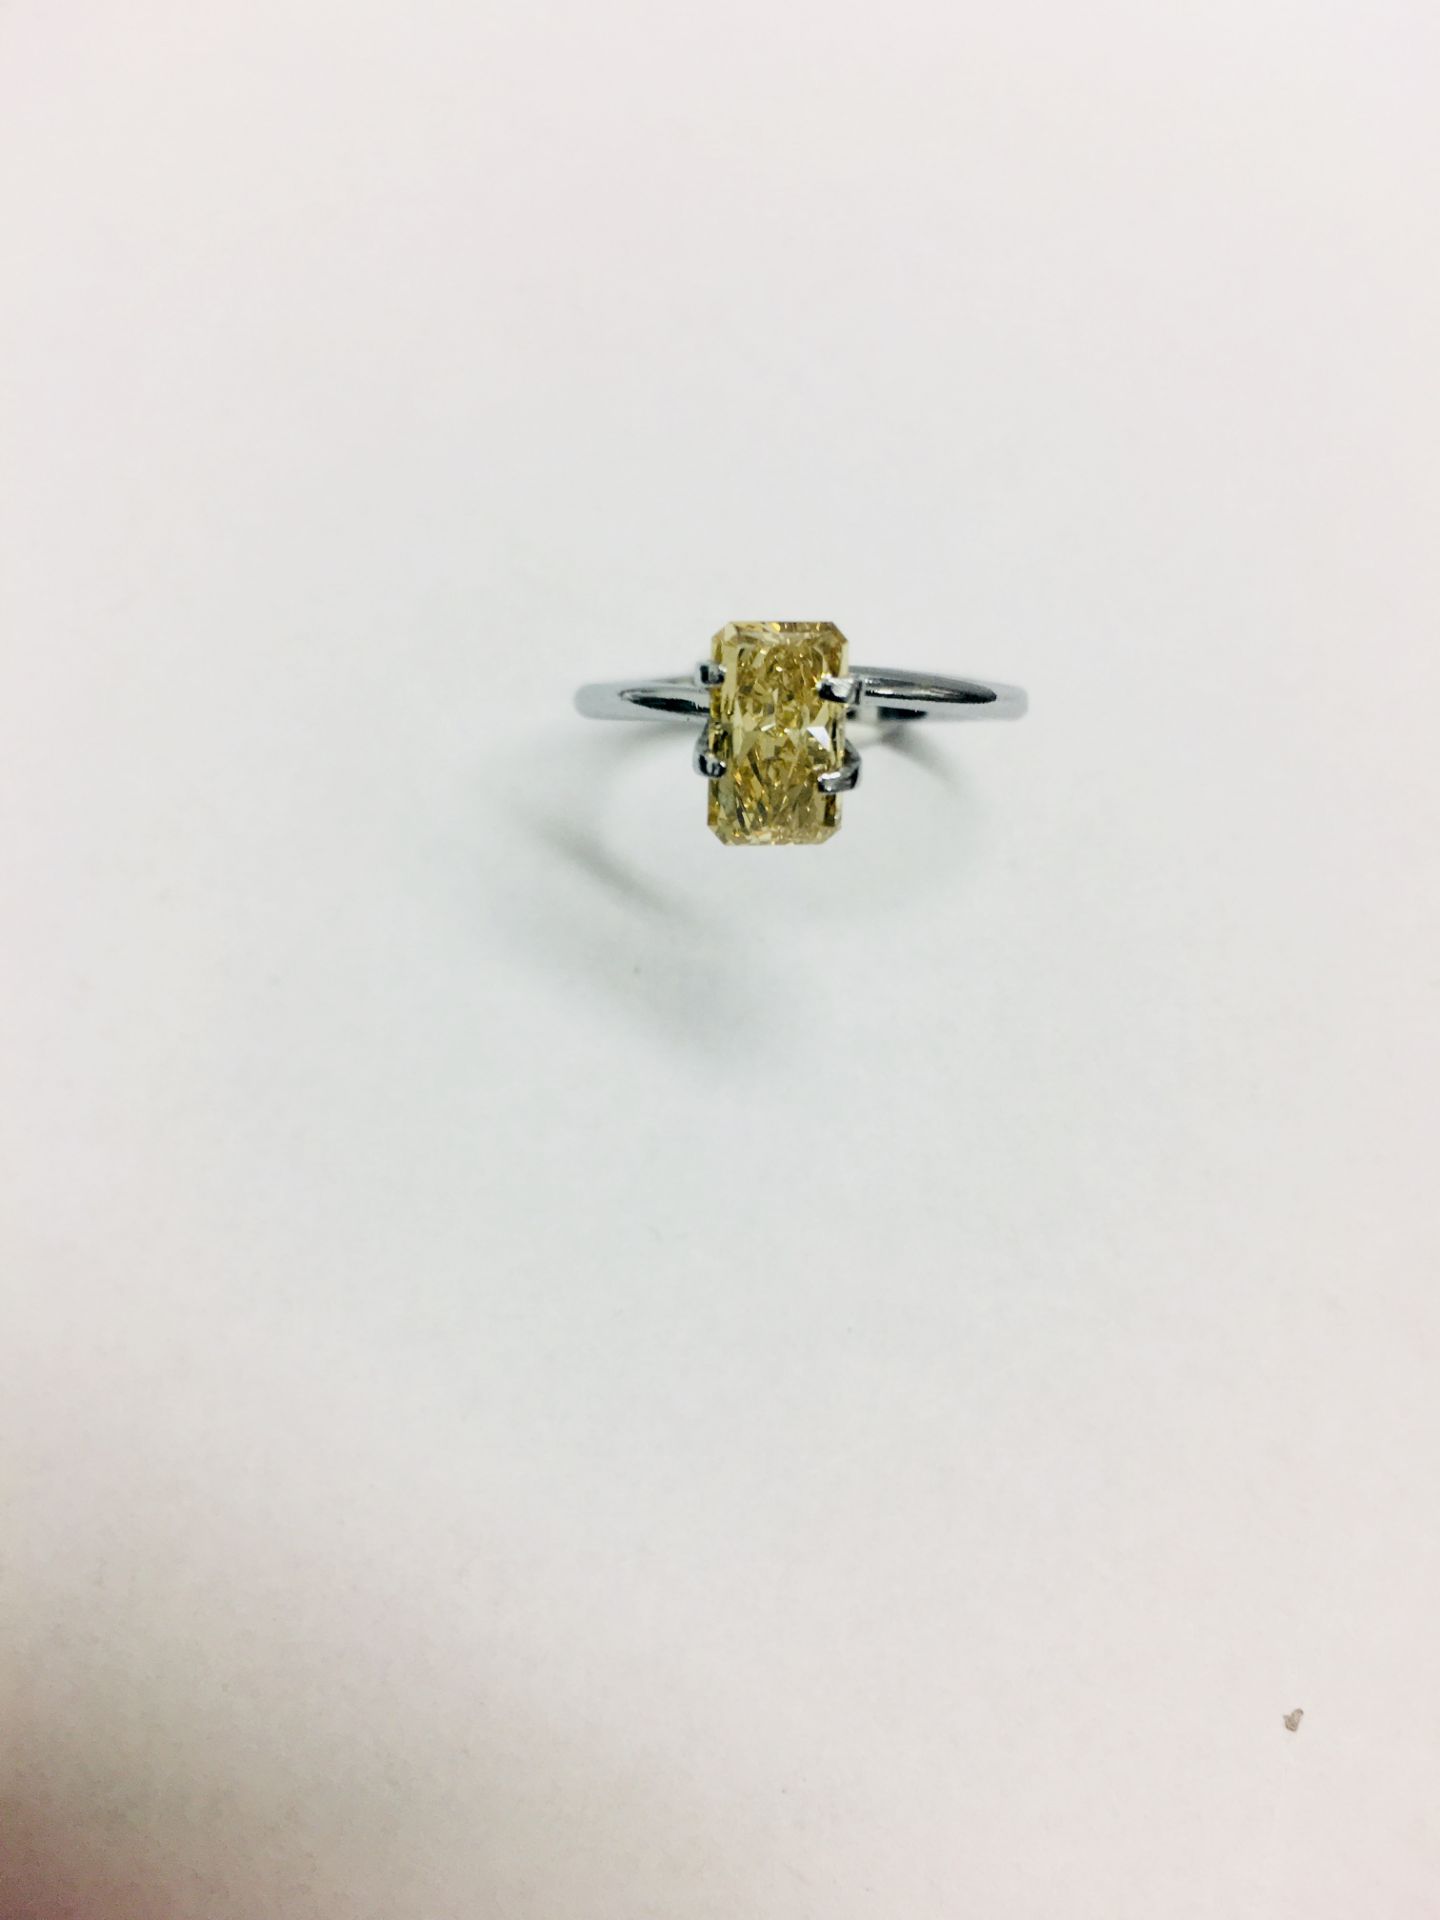 1.61ct fancy yellow diamond radiant shape vs2 clarity,wgi certification appraisal 8500 - Image 2 of 2